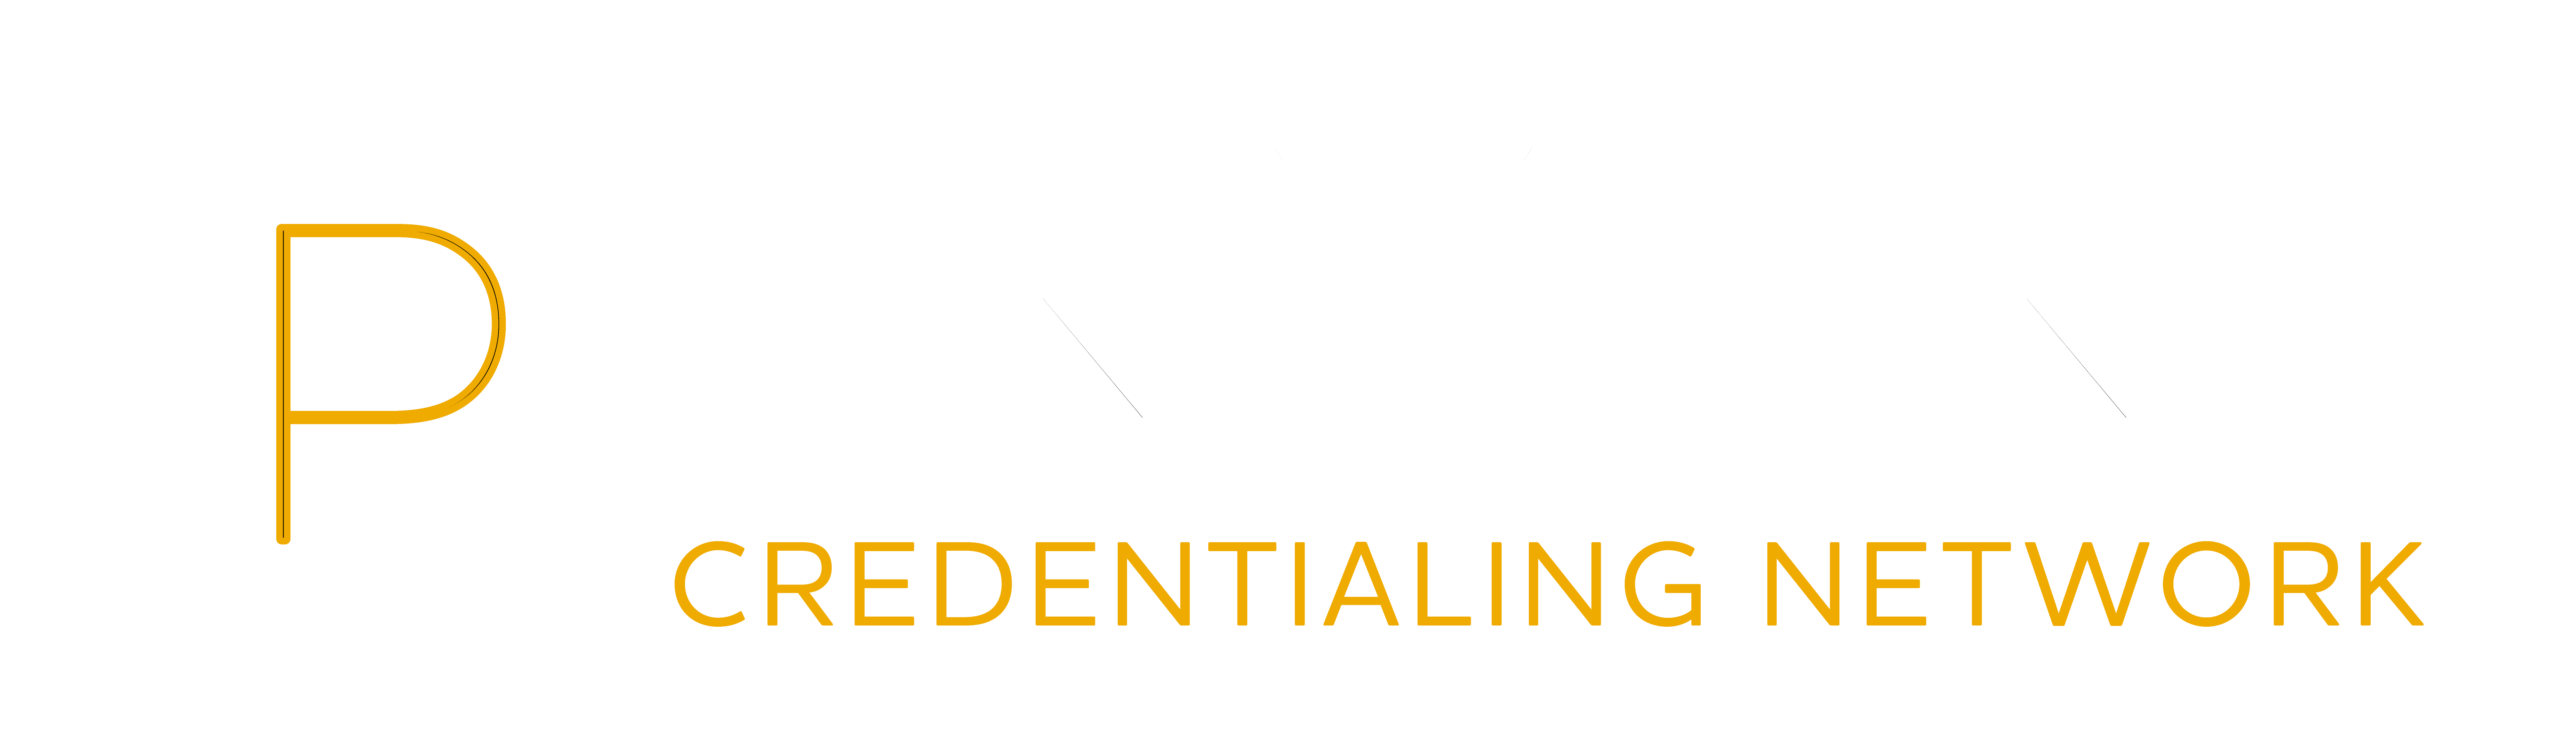 Primoris Credentialing Network PrimorisCredentialingNetwork.com